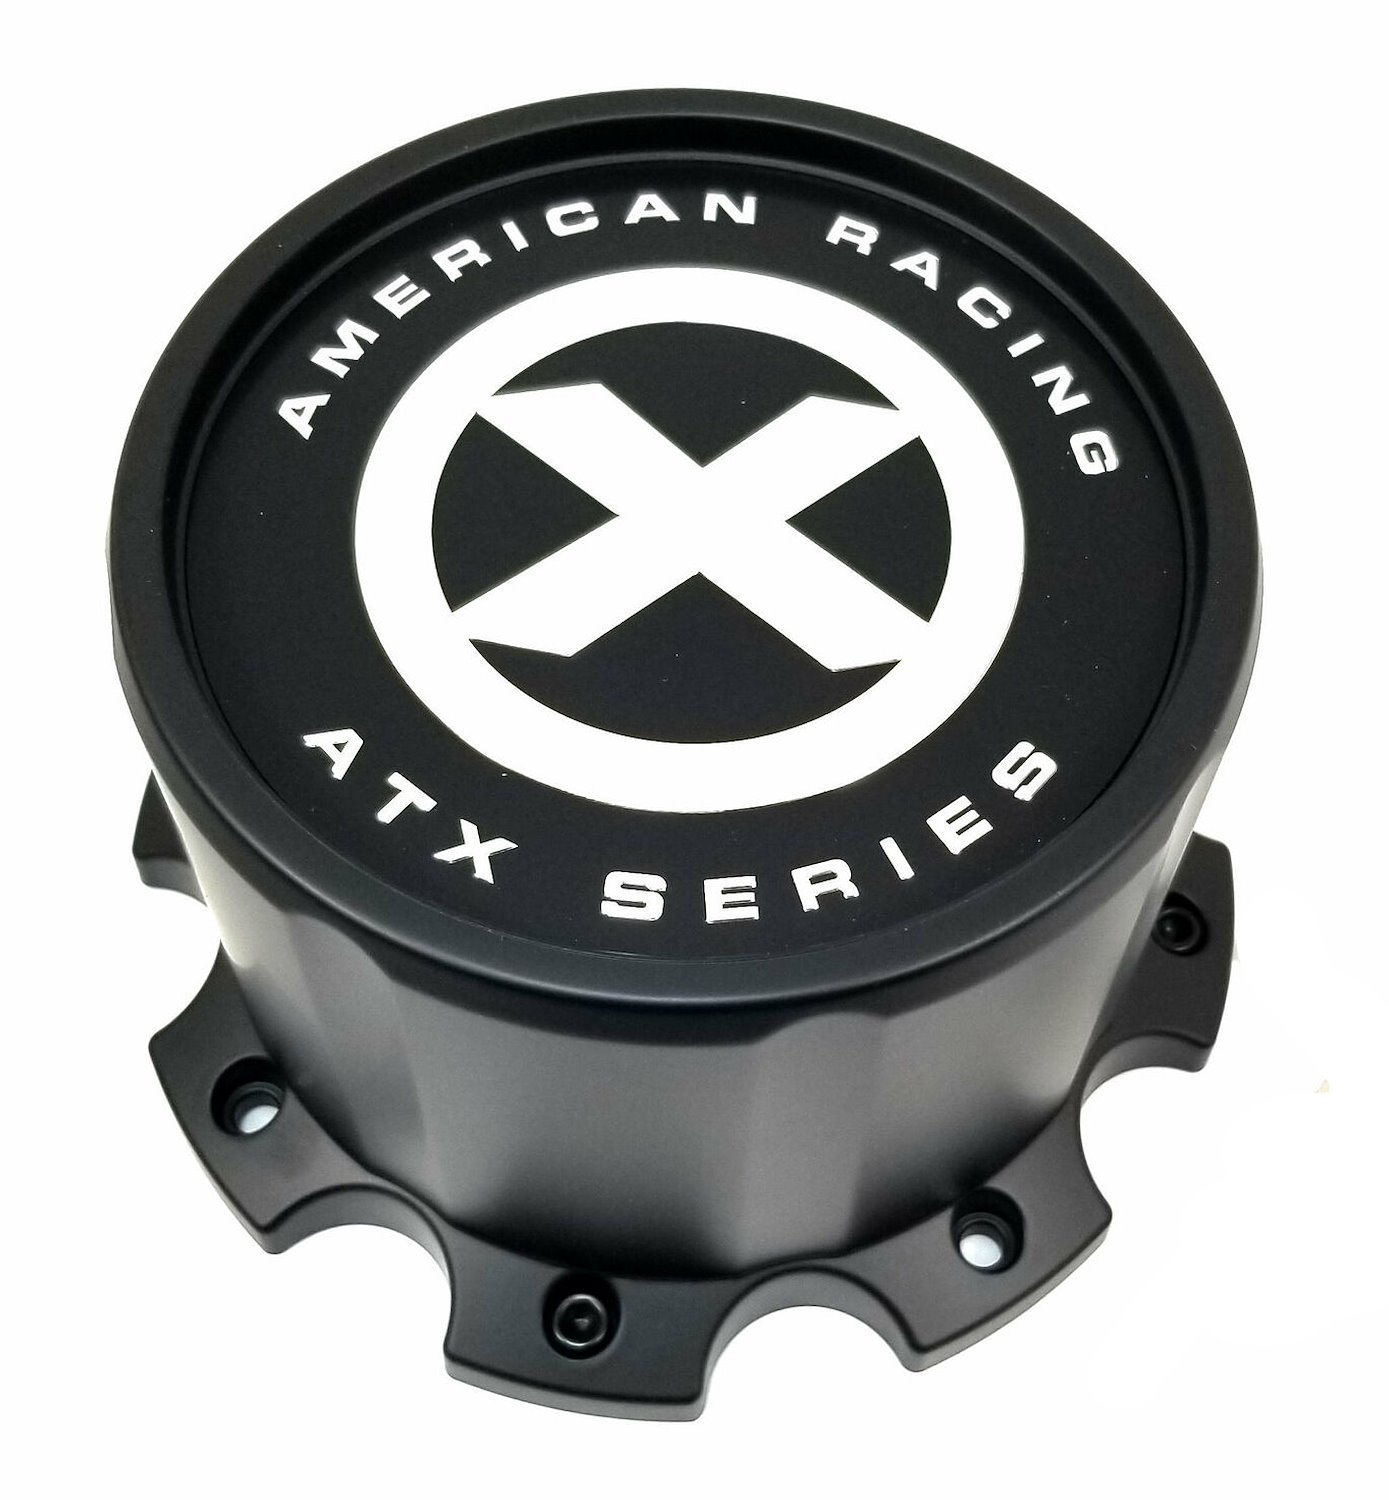 Center Cap for American Racing ATX AX204 Baja Dually Series Wheels [Black] 6.750 x 4.625 in.